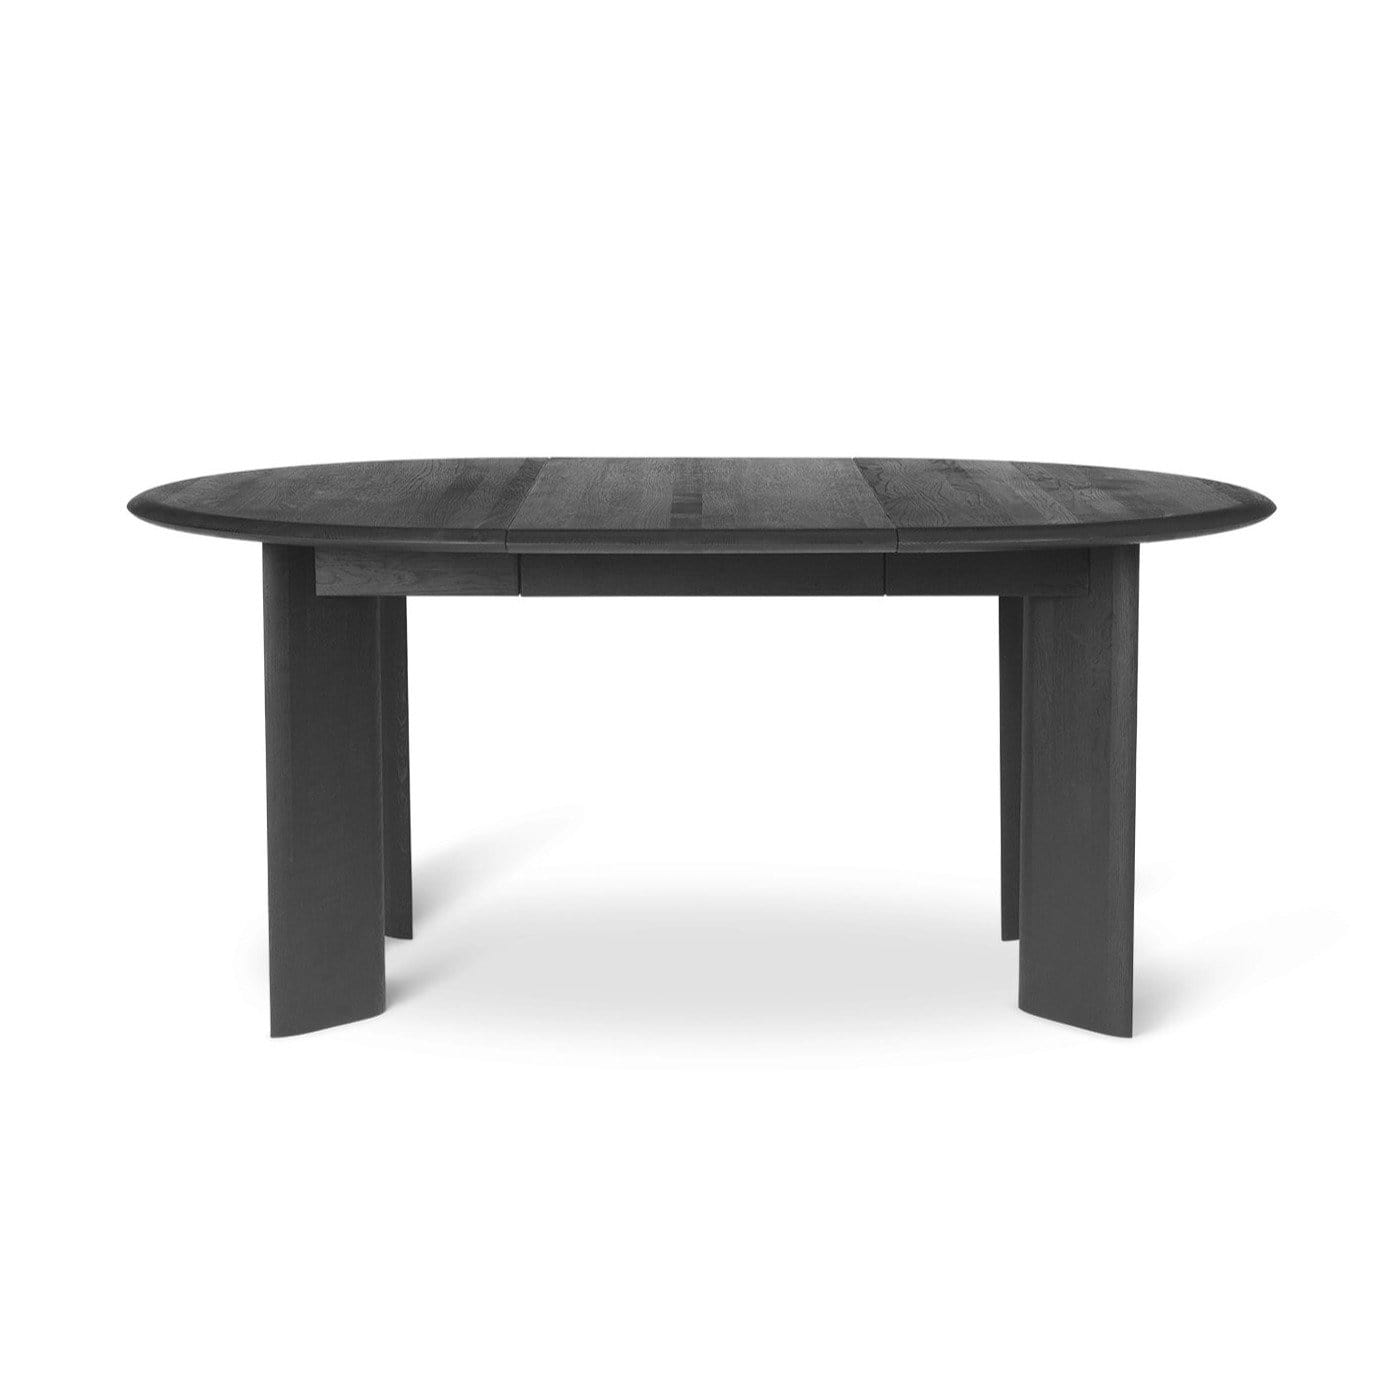 Ferm Living Bevel Table extendable Ø117-167cm in black oiled oak. Available from someday designs   #colour_black-oiled-oak